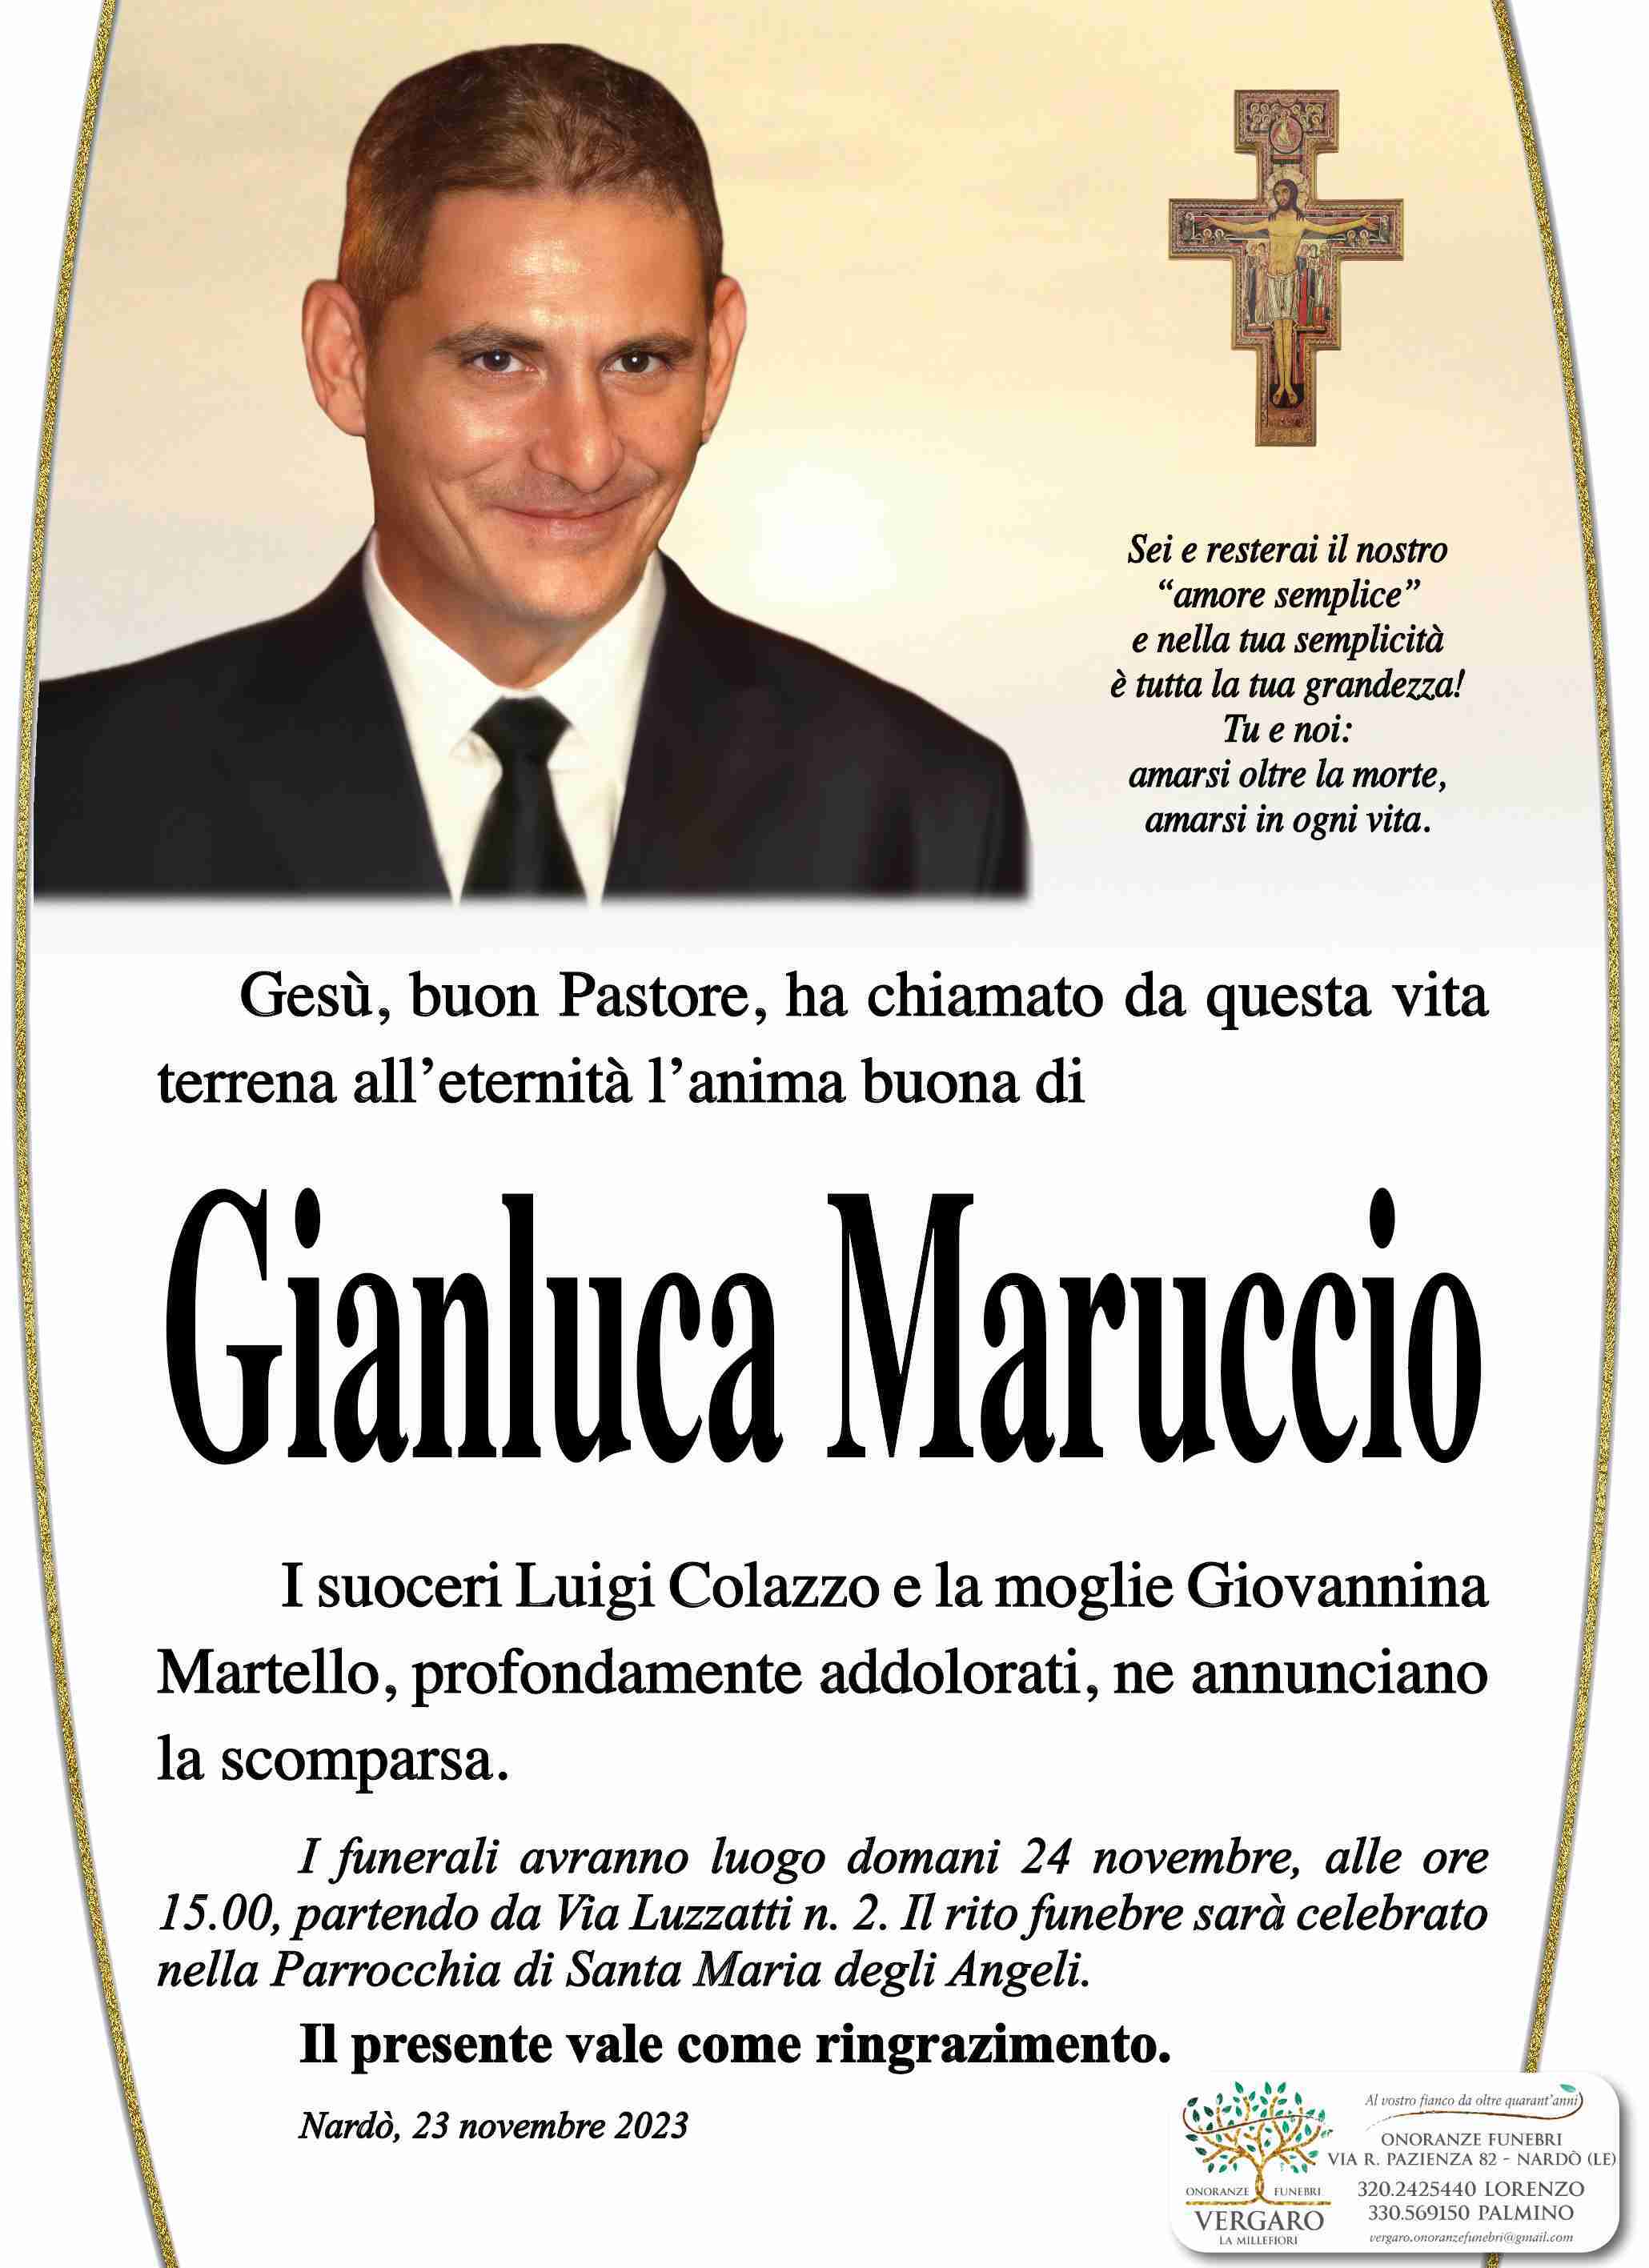 Gianluca Maruccio